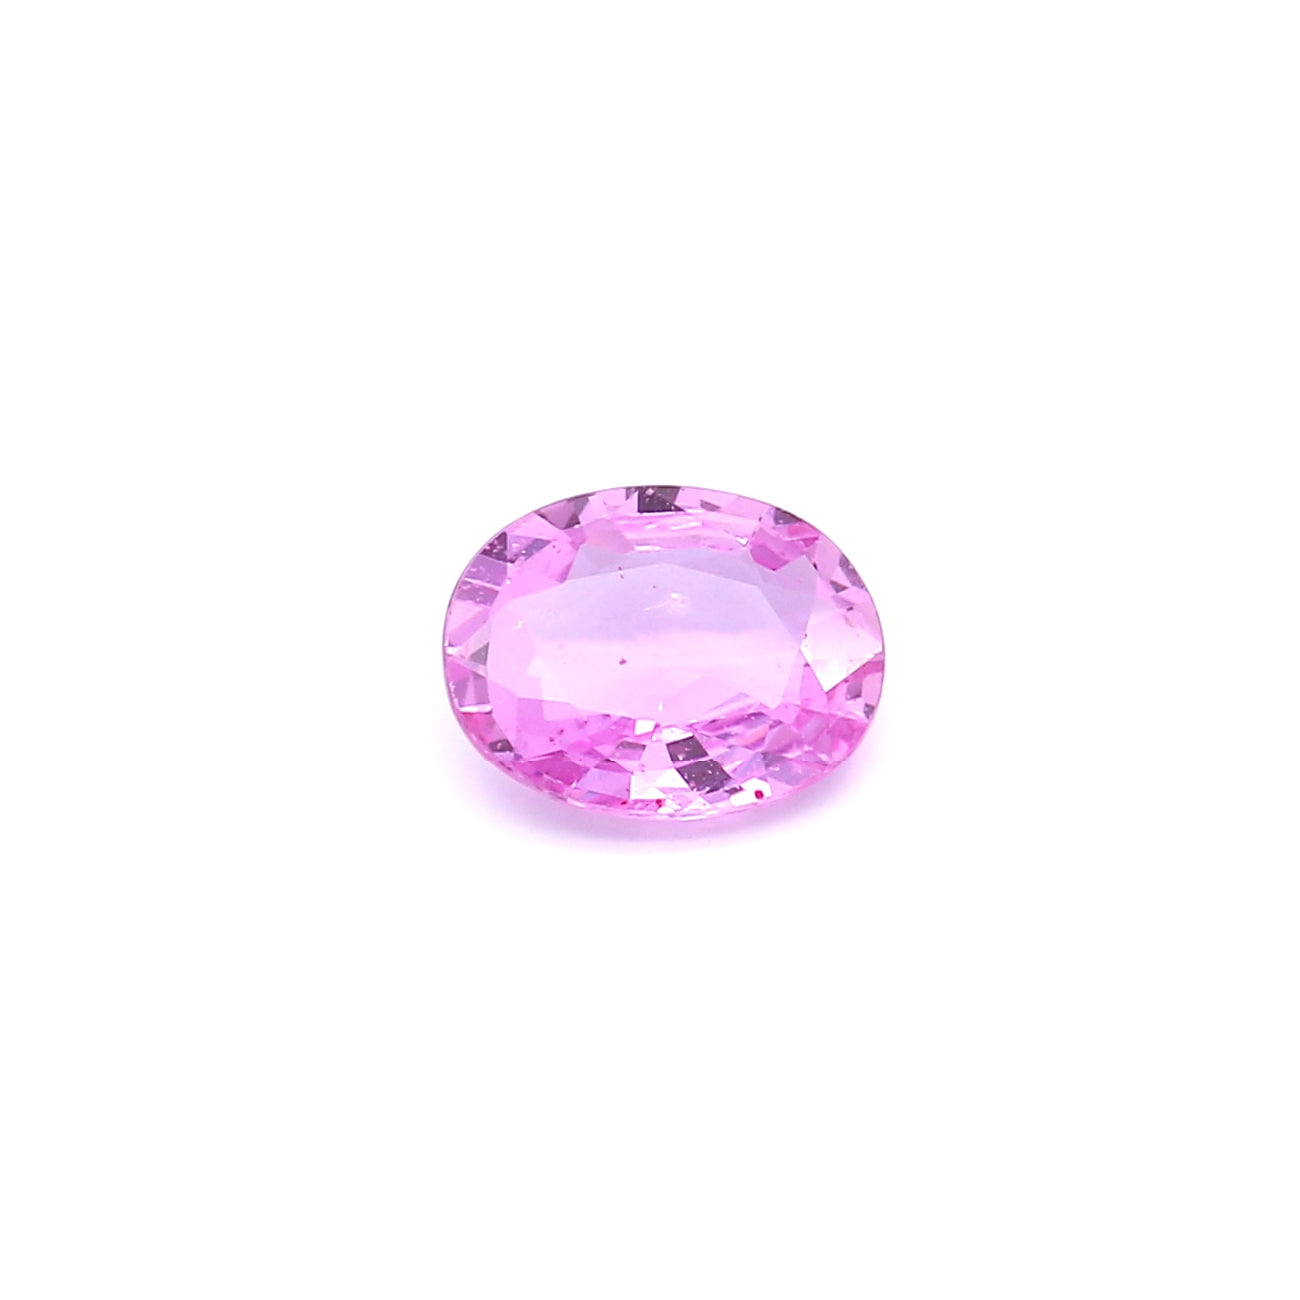 1.24ct Purplish Pink, Oval Sapphire, Heated, Madagascar - 7.85 x 6.11 x 2.82mm